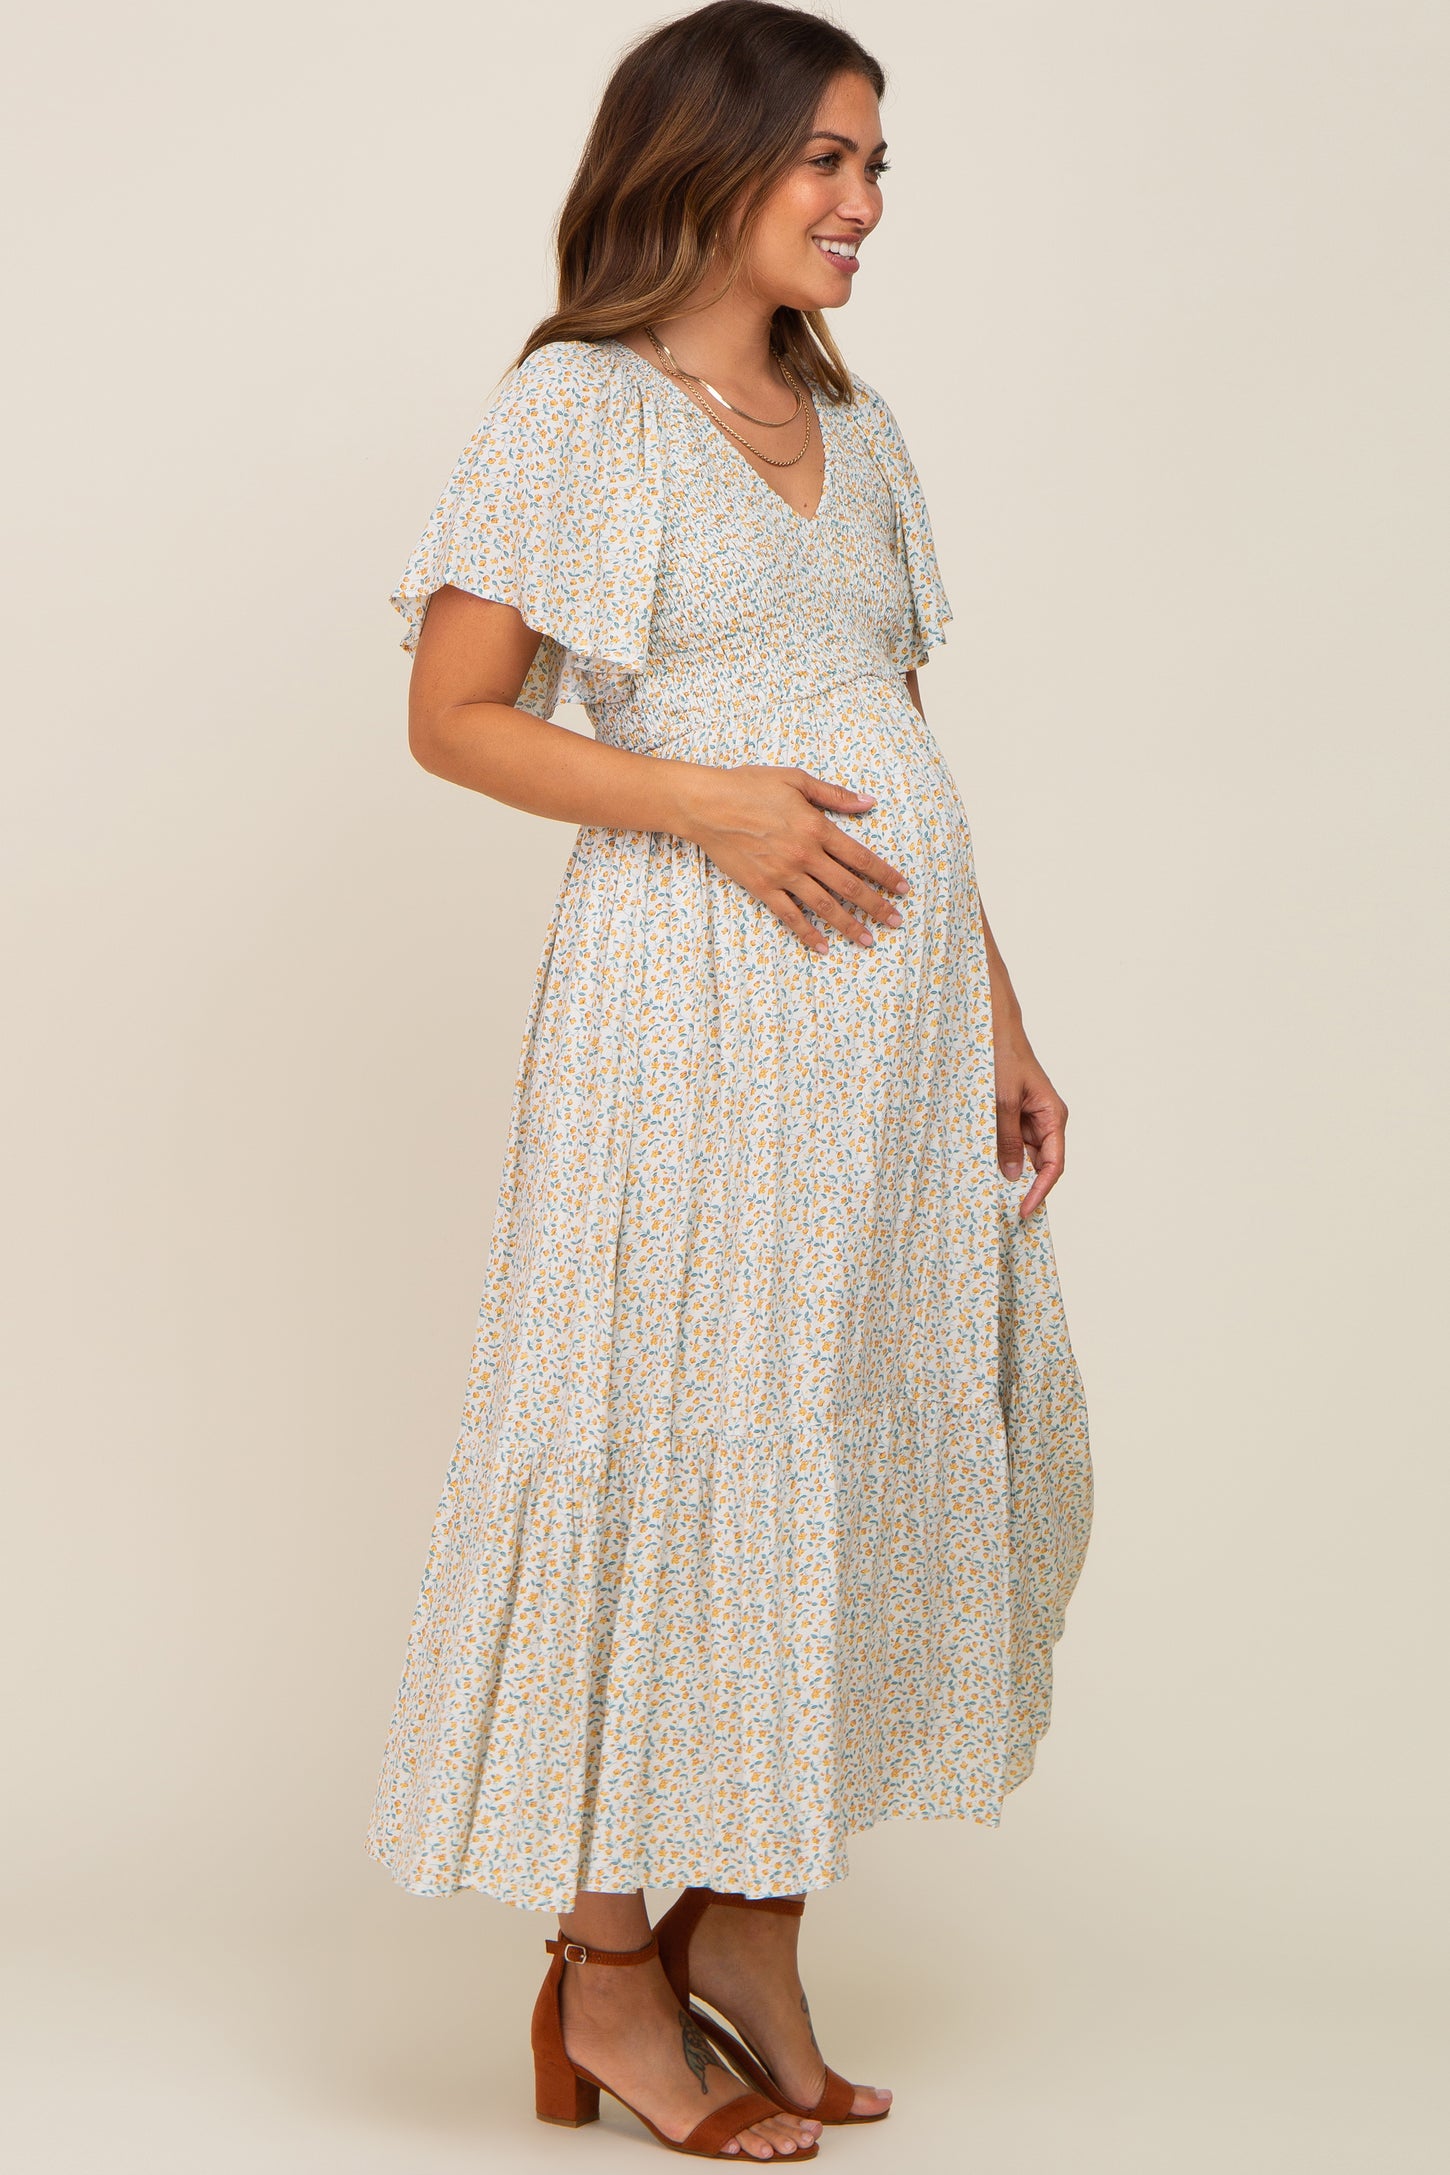 Ivory Floral Smocked Maternity Midi Dress